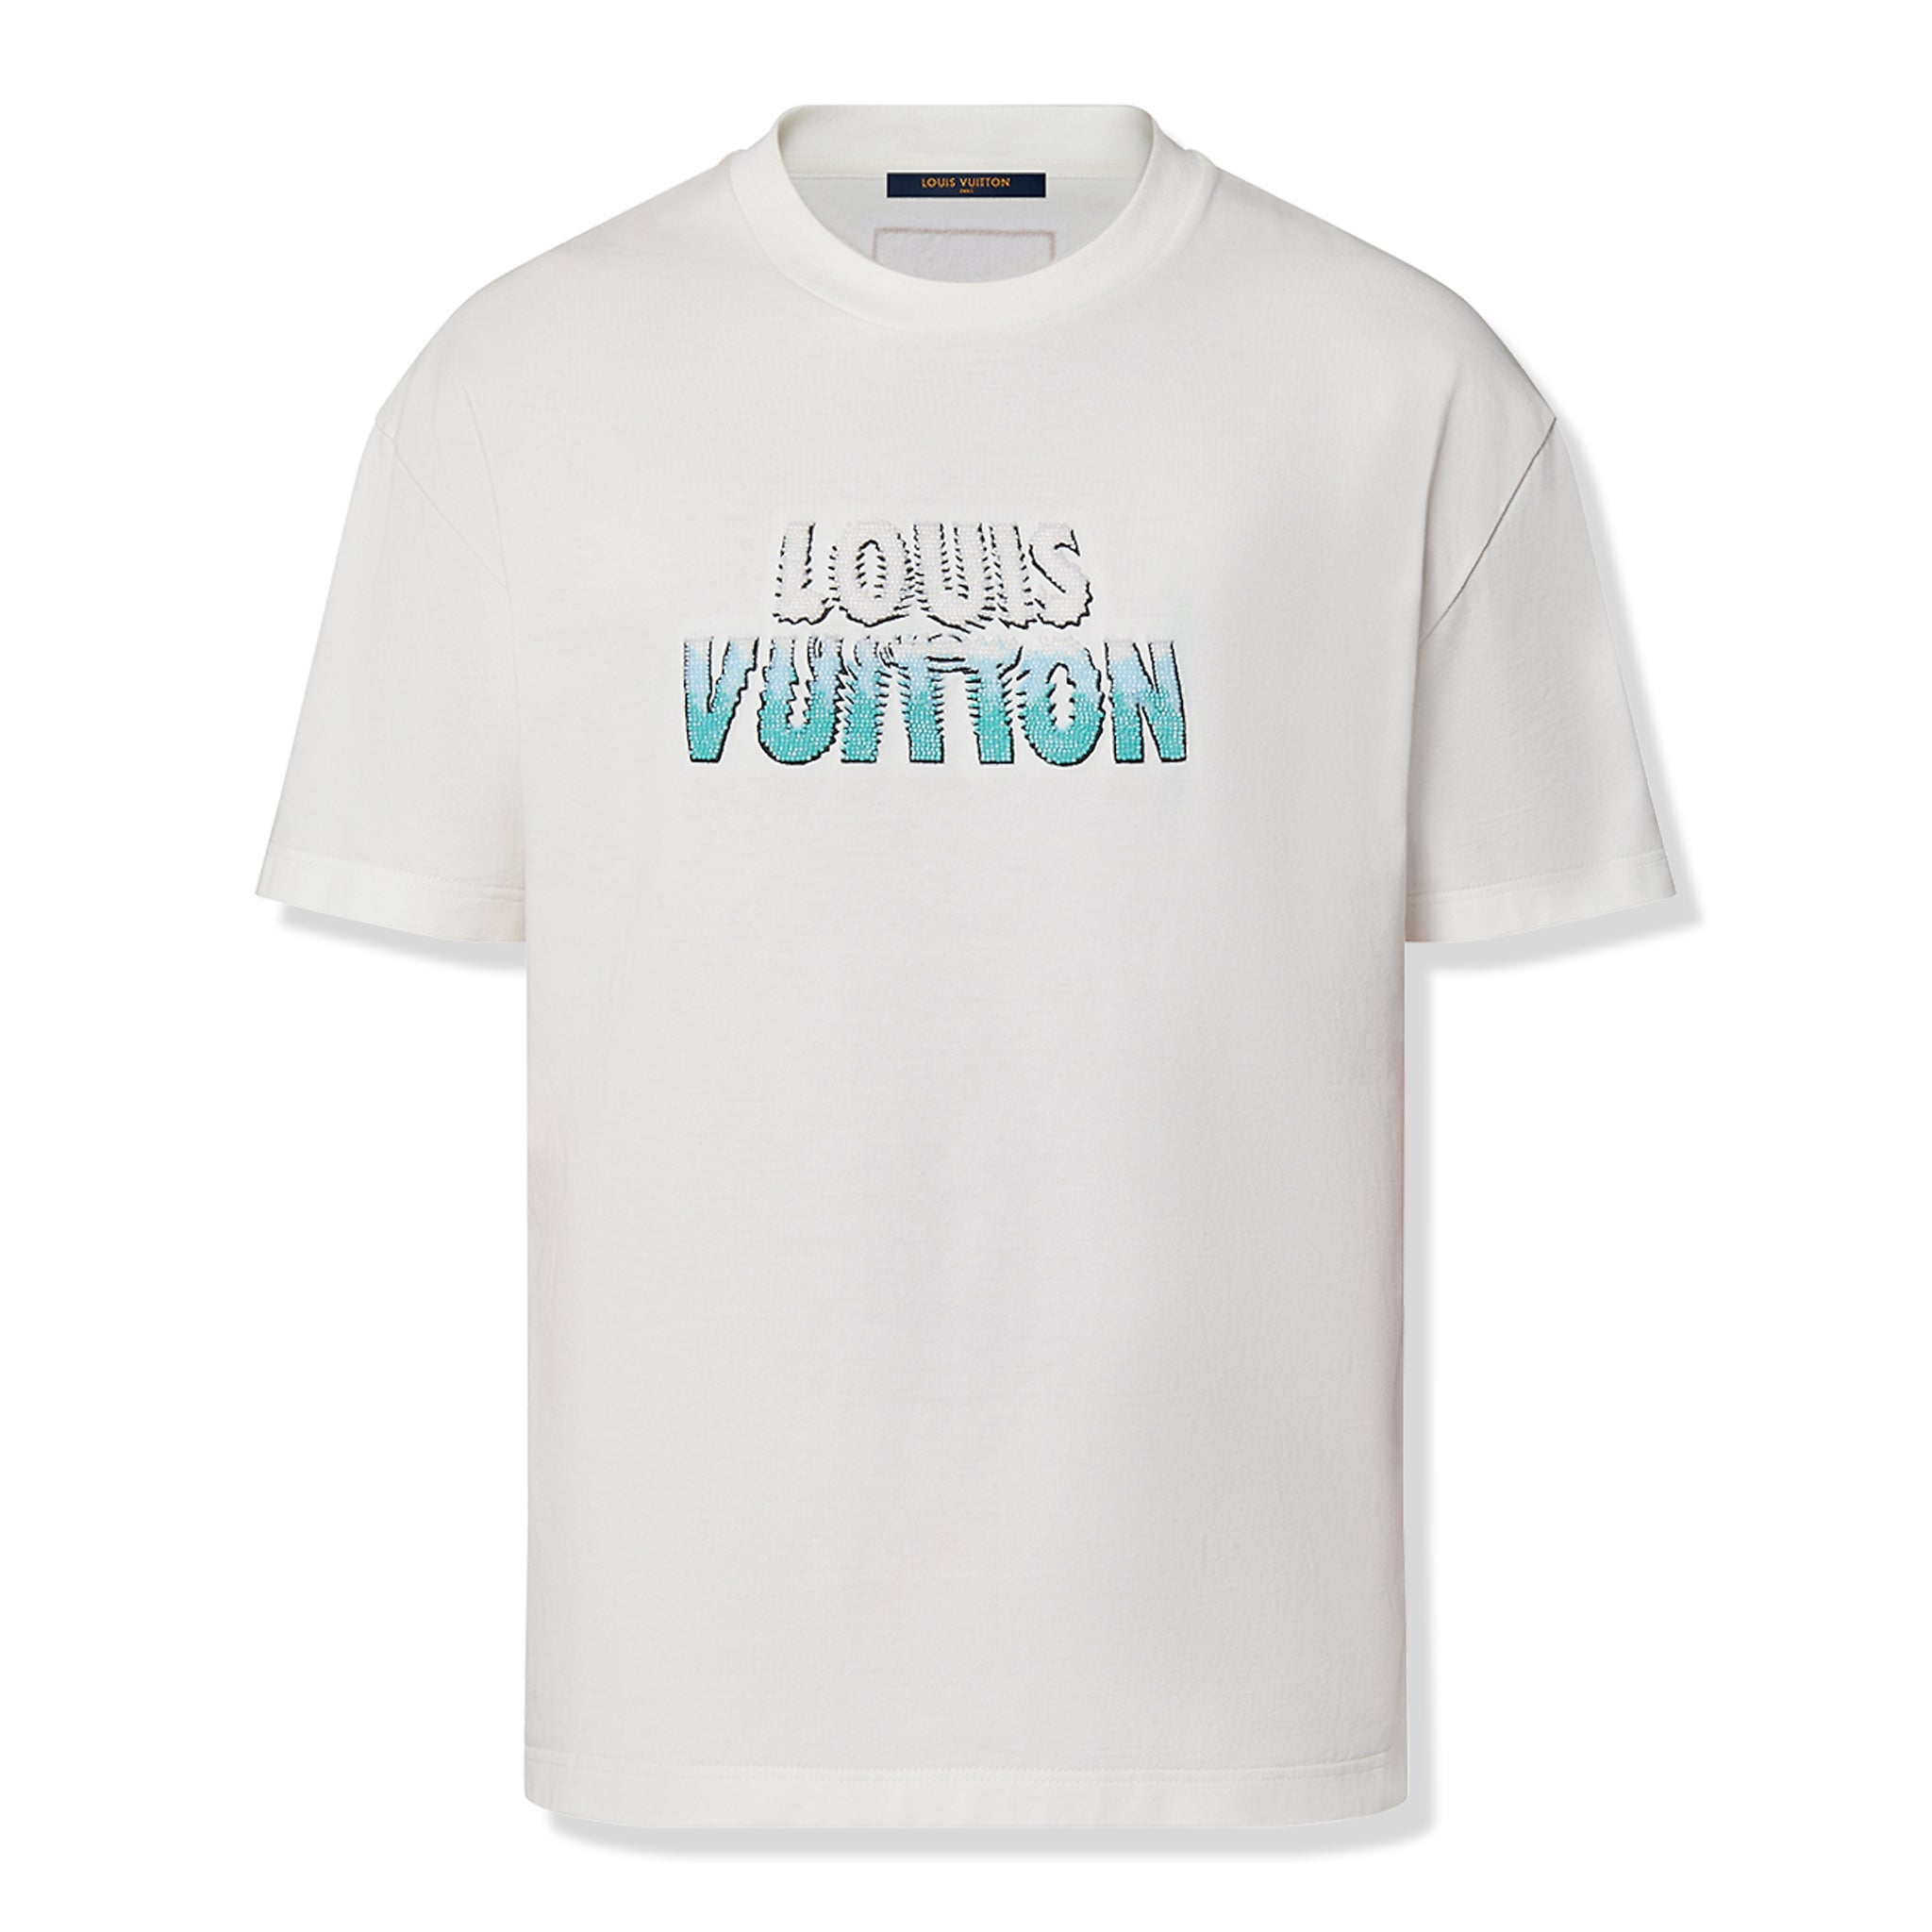 Louis Vuitton Louis Vuitton LV Spread Embroidery T-Shirt Black